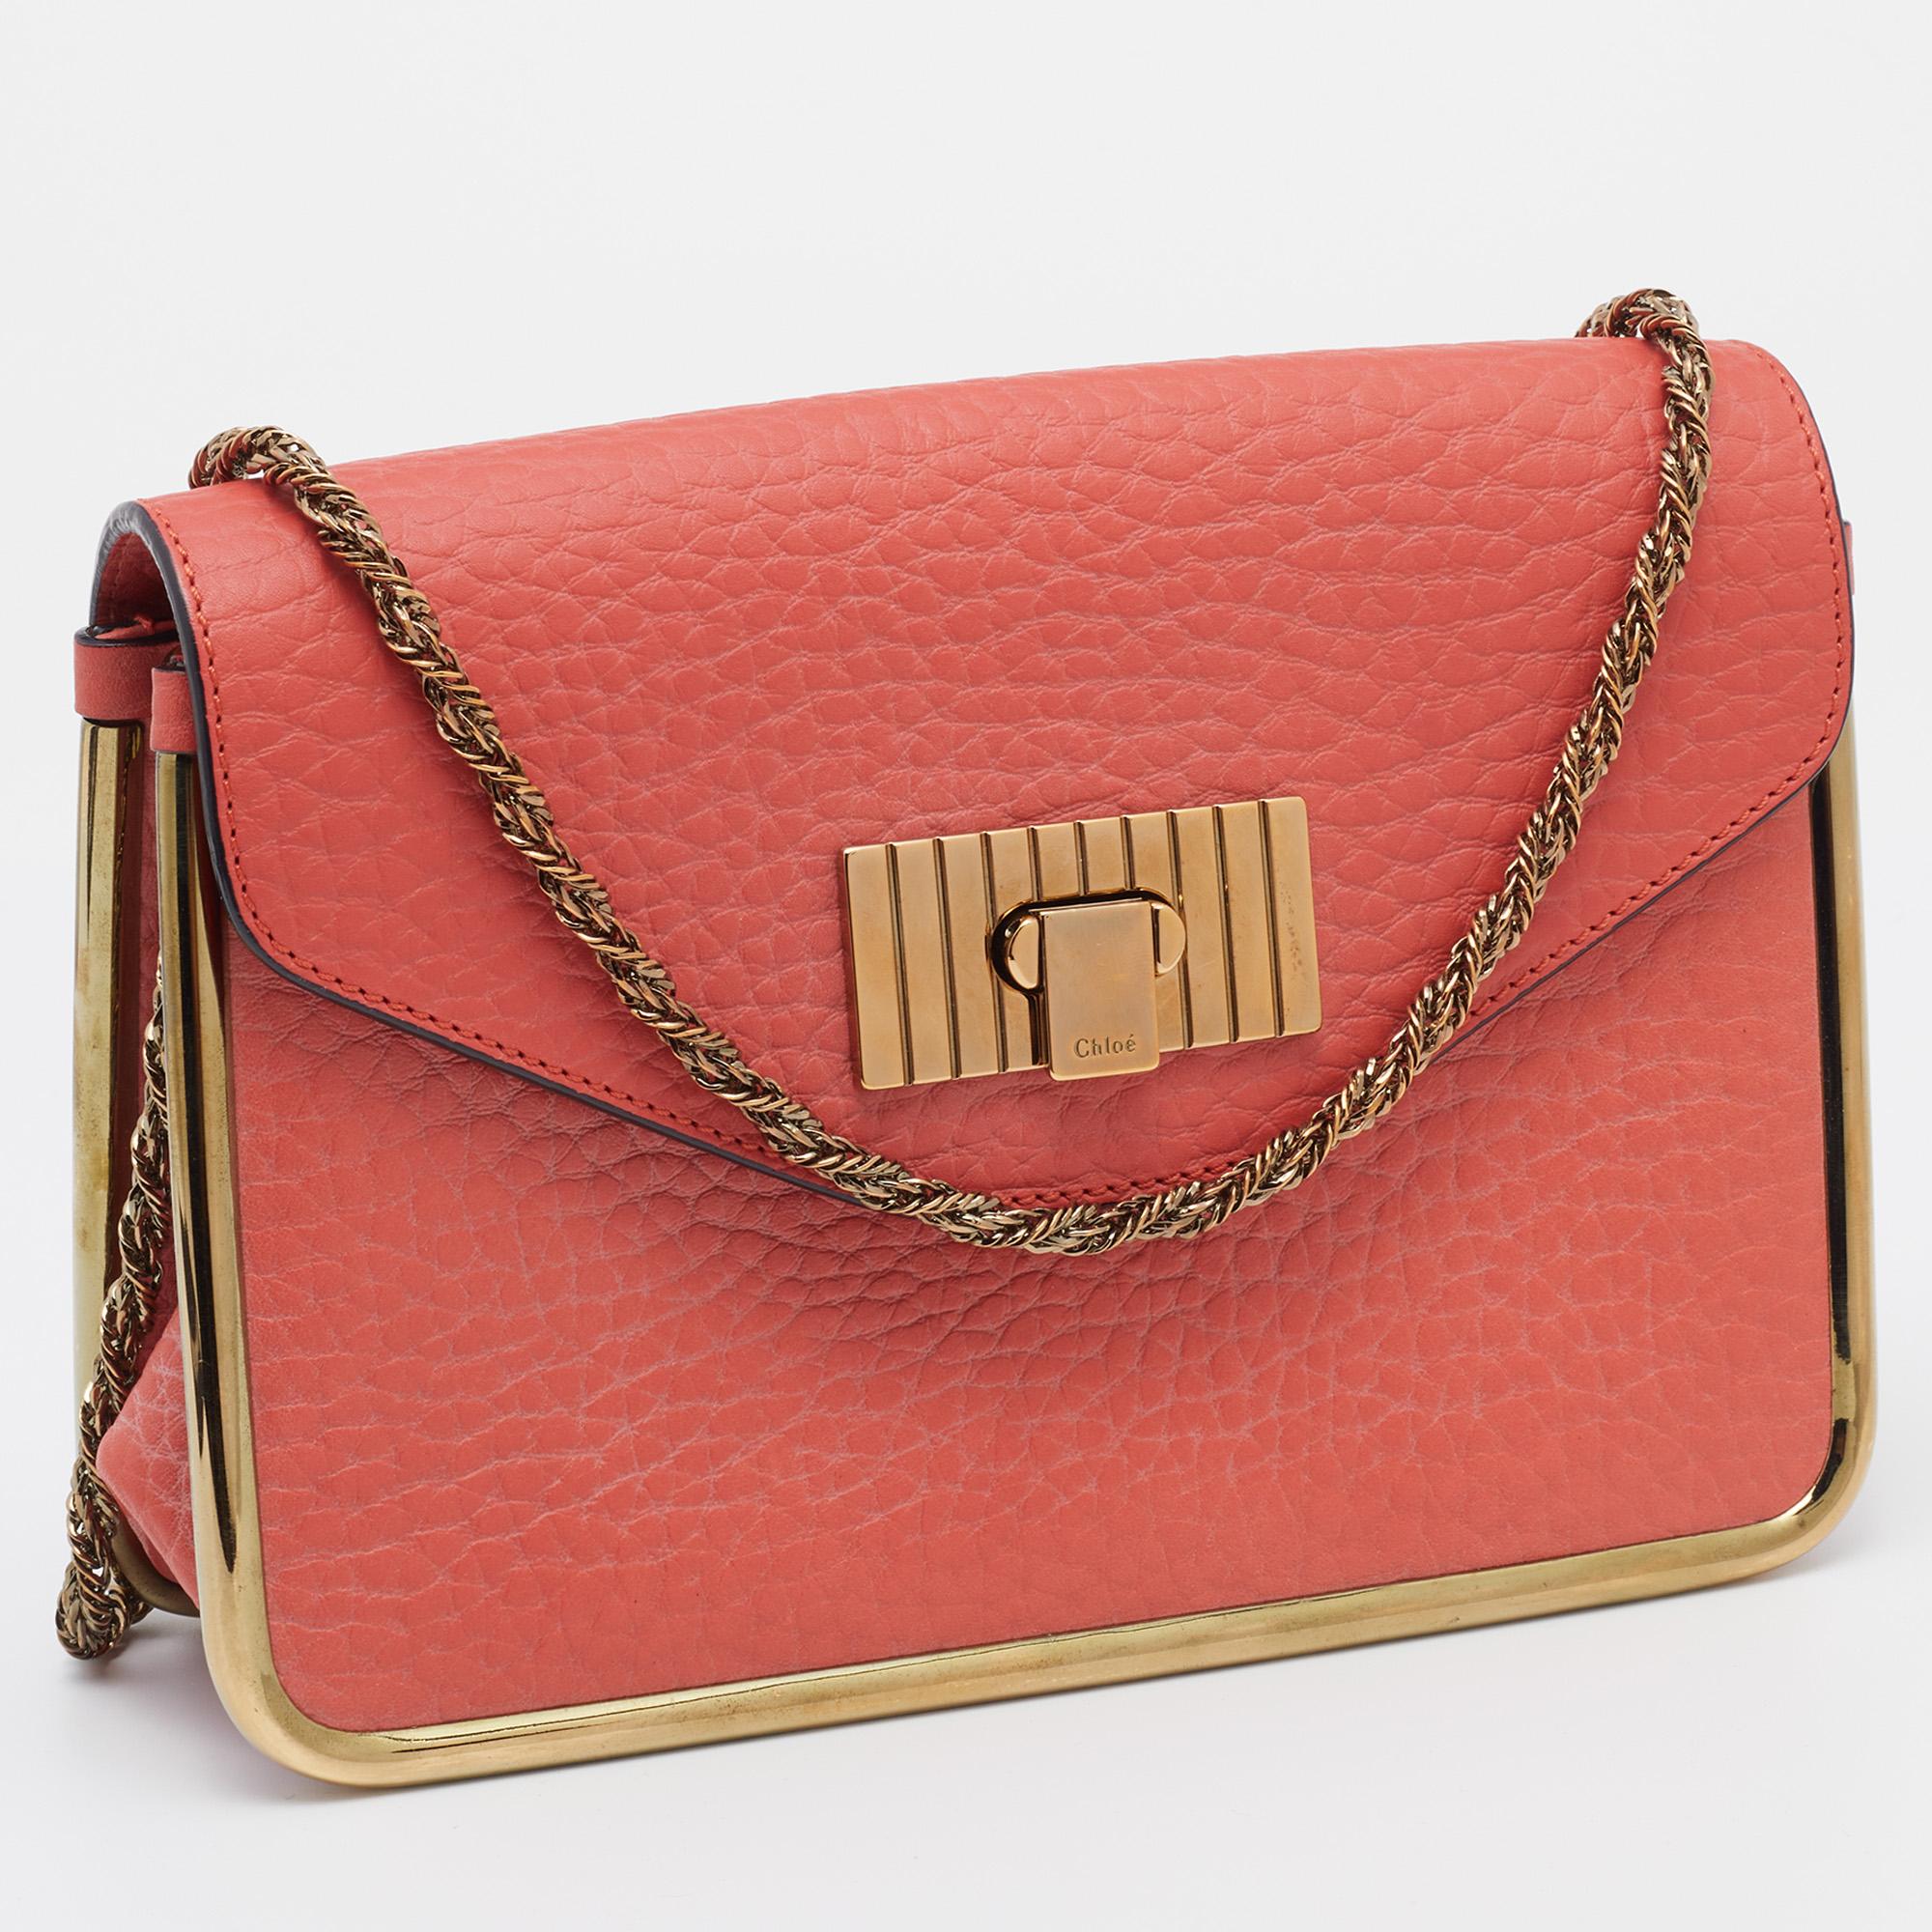 Women's Chloe Orange Leather Sally Shoulder Bag